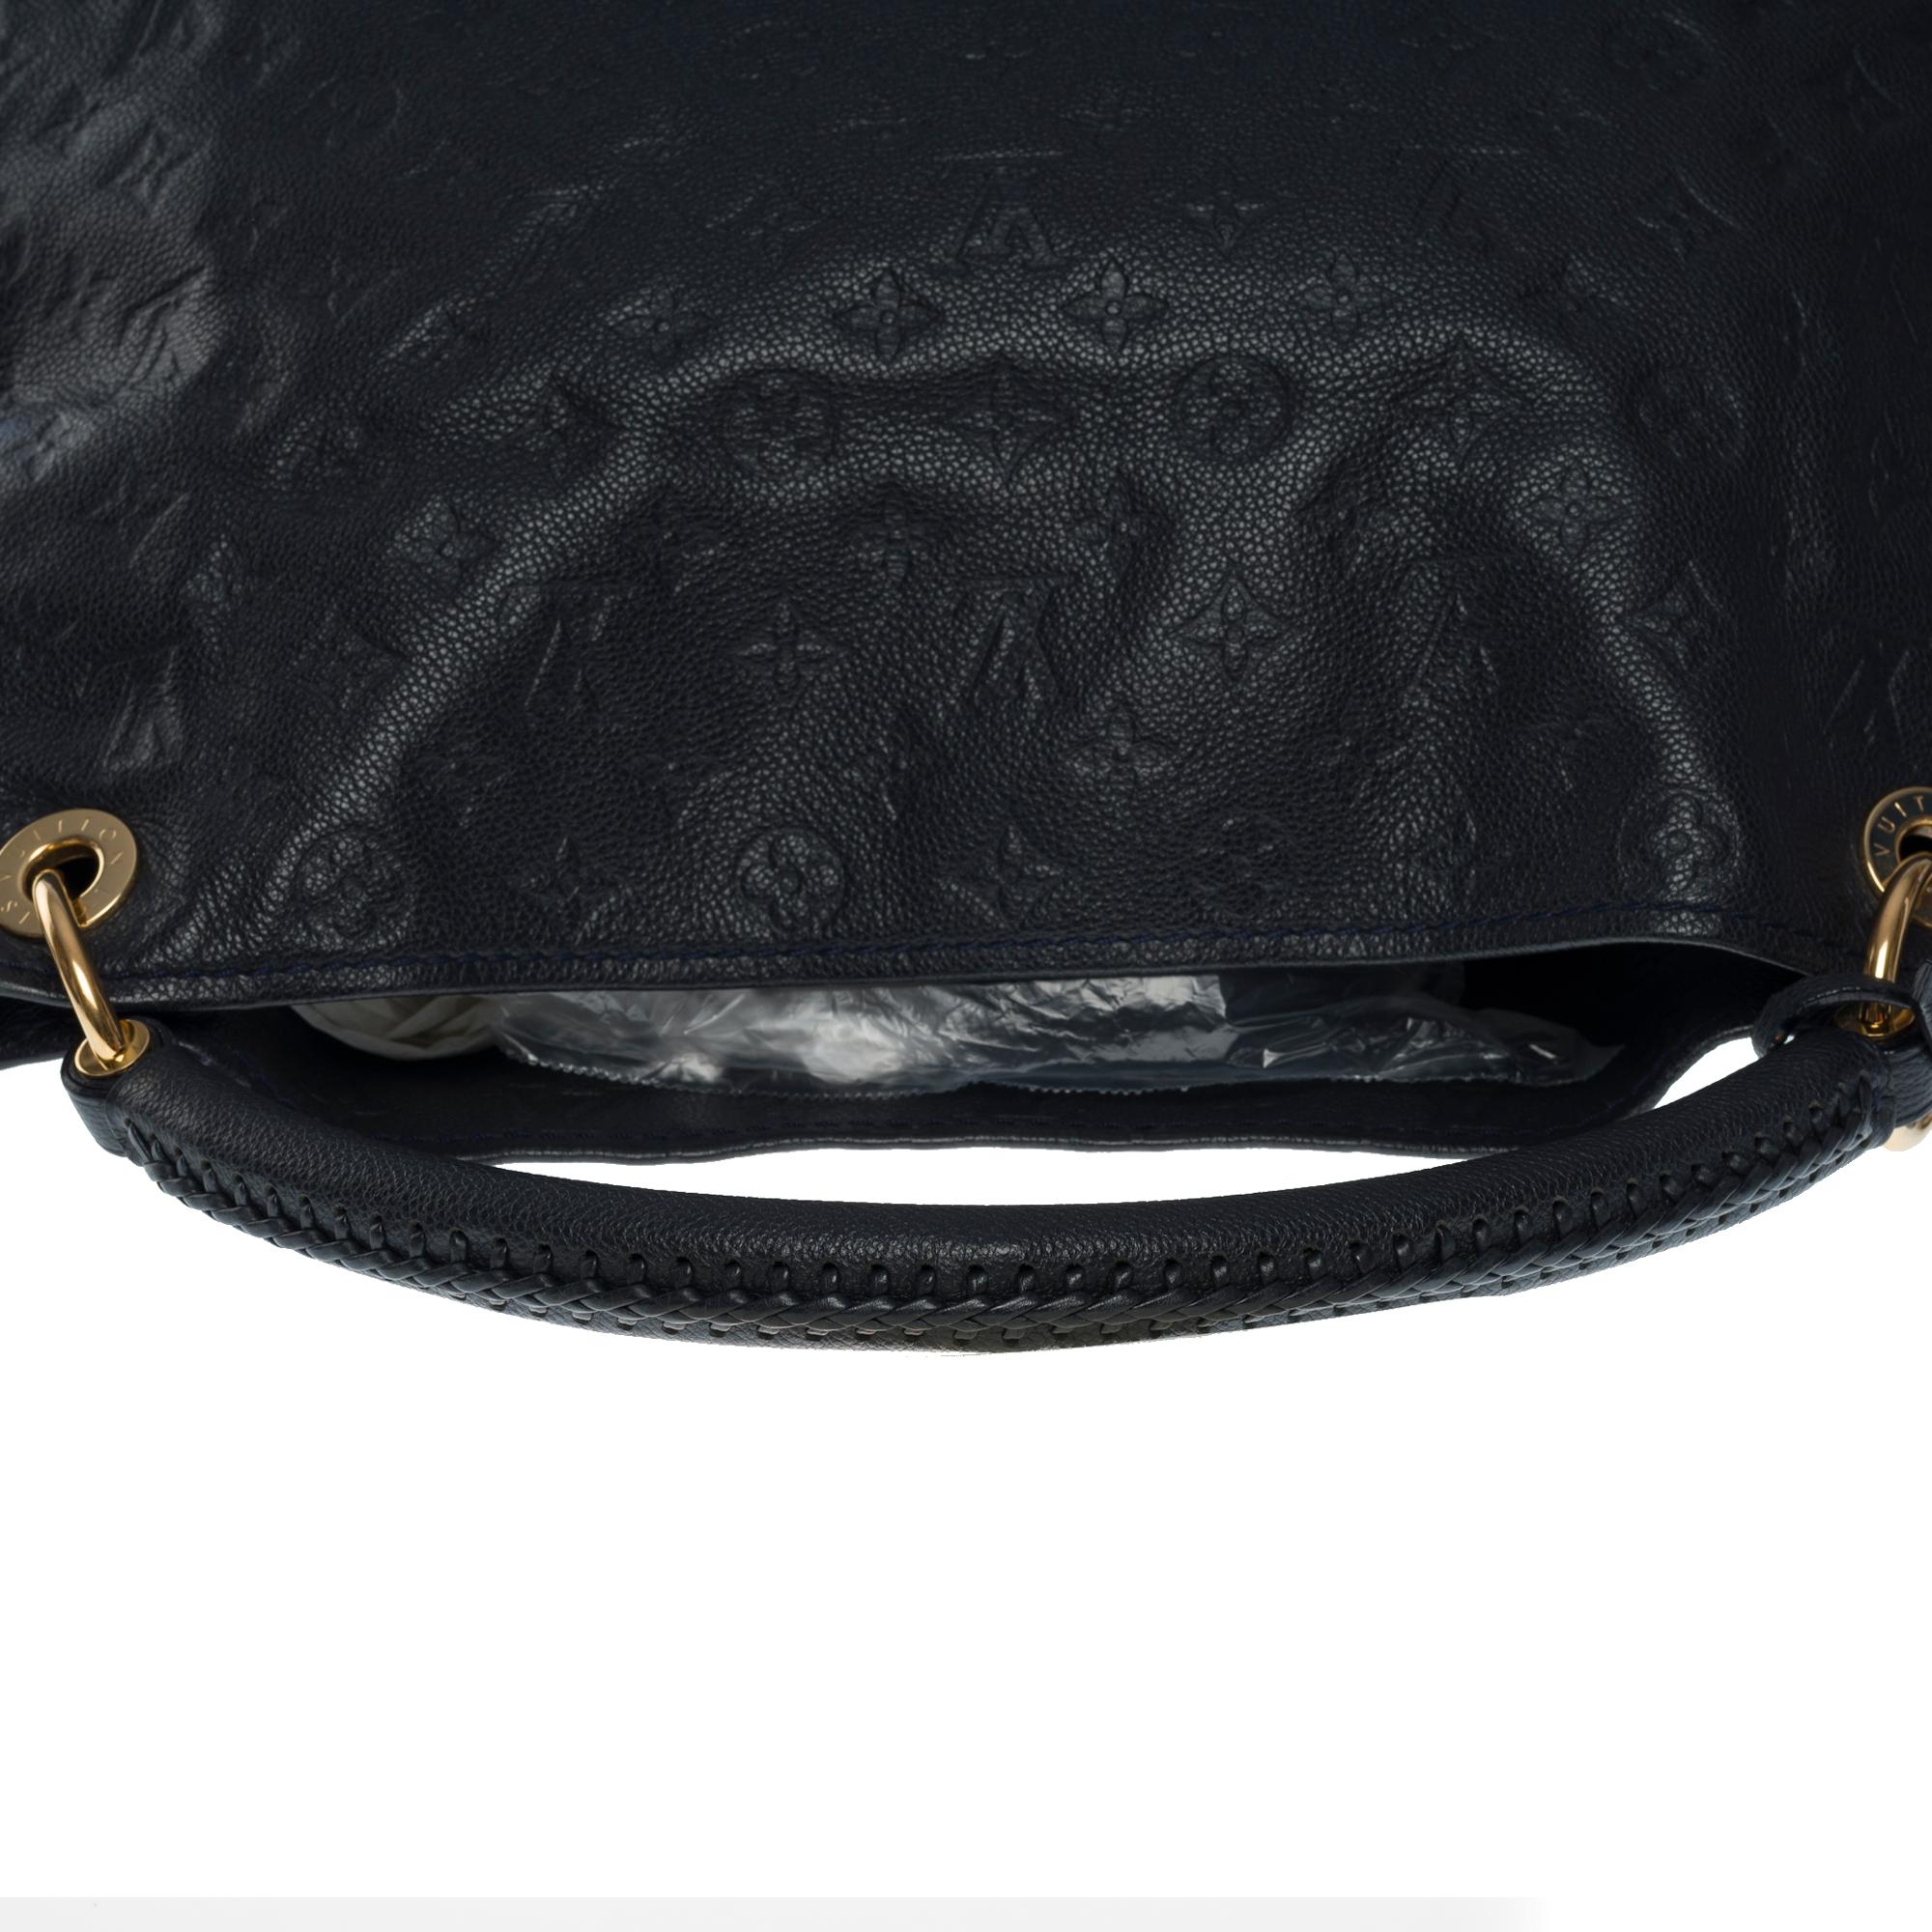 Louis Vuitton Artsy MM Hobo bag in dark blue monogram calfskin leather, GHW 4